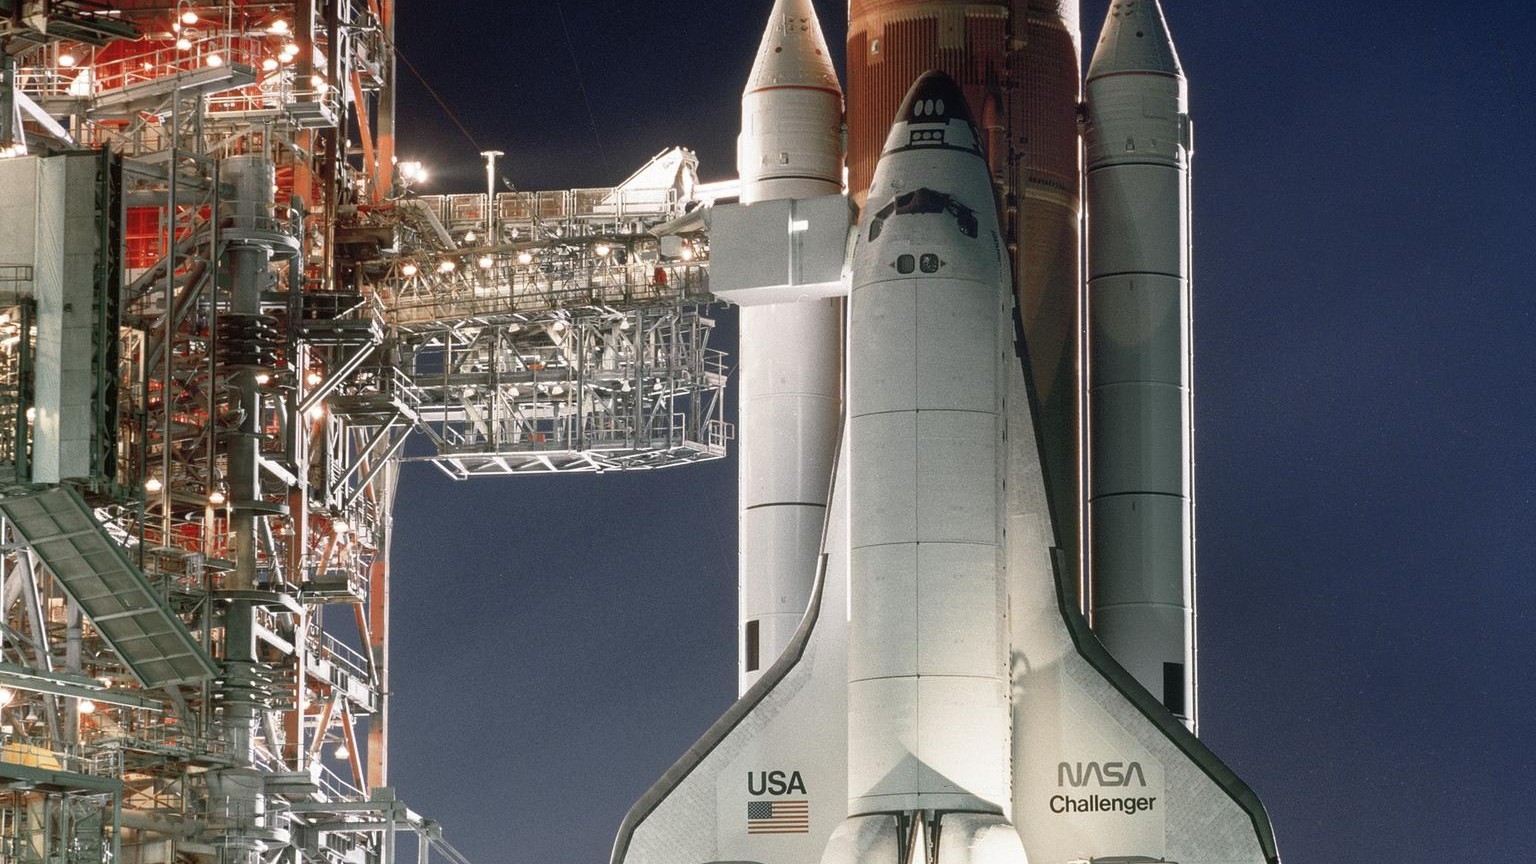 Space shuttle Challenger